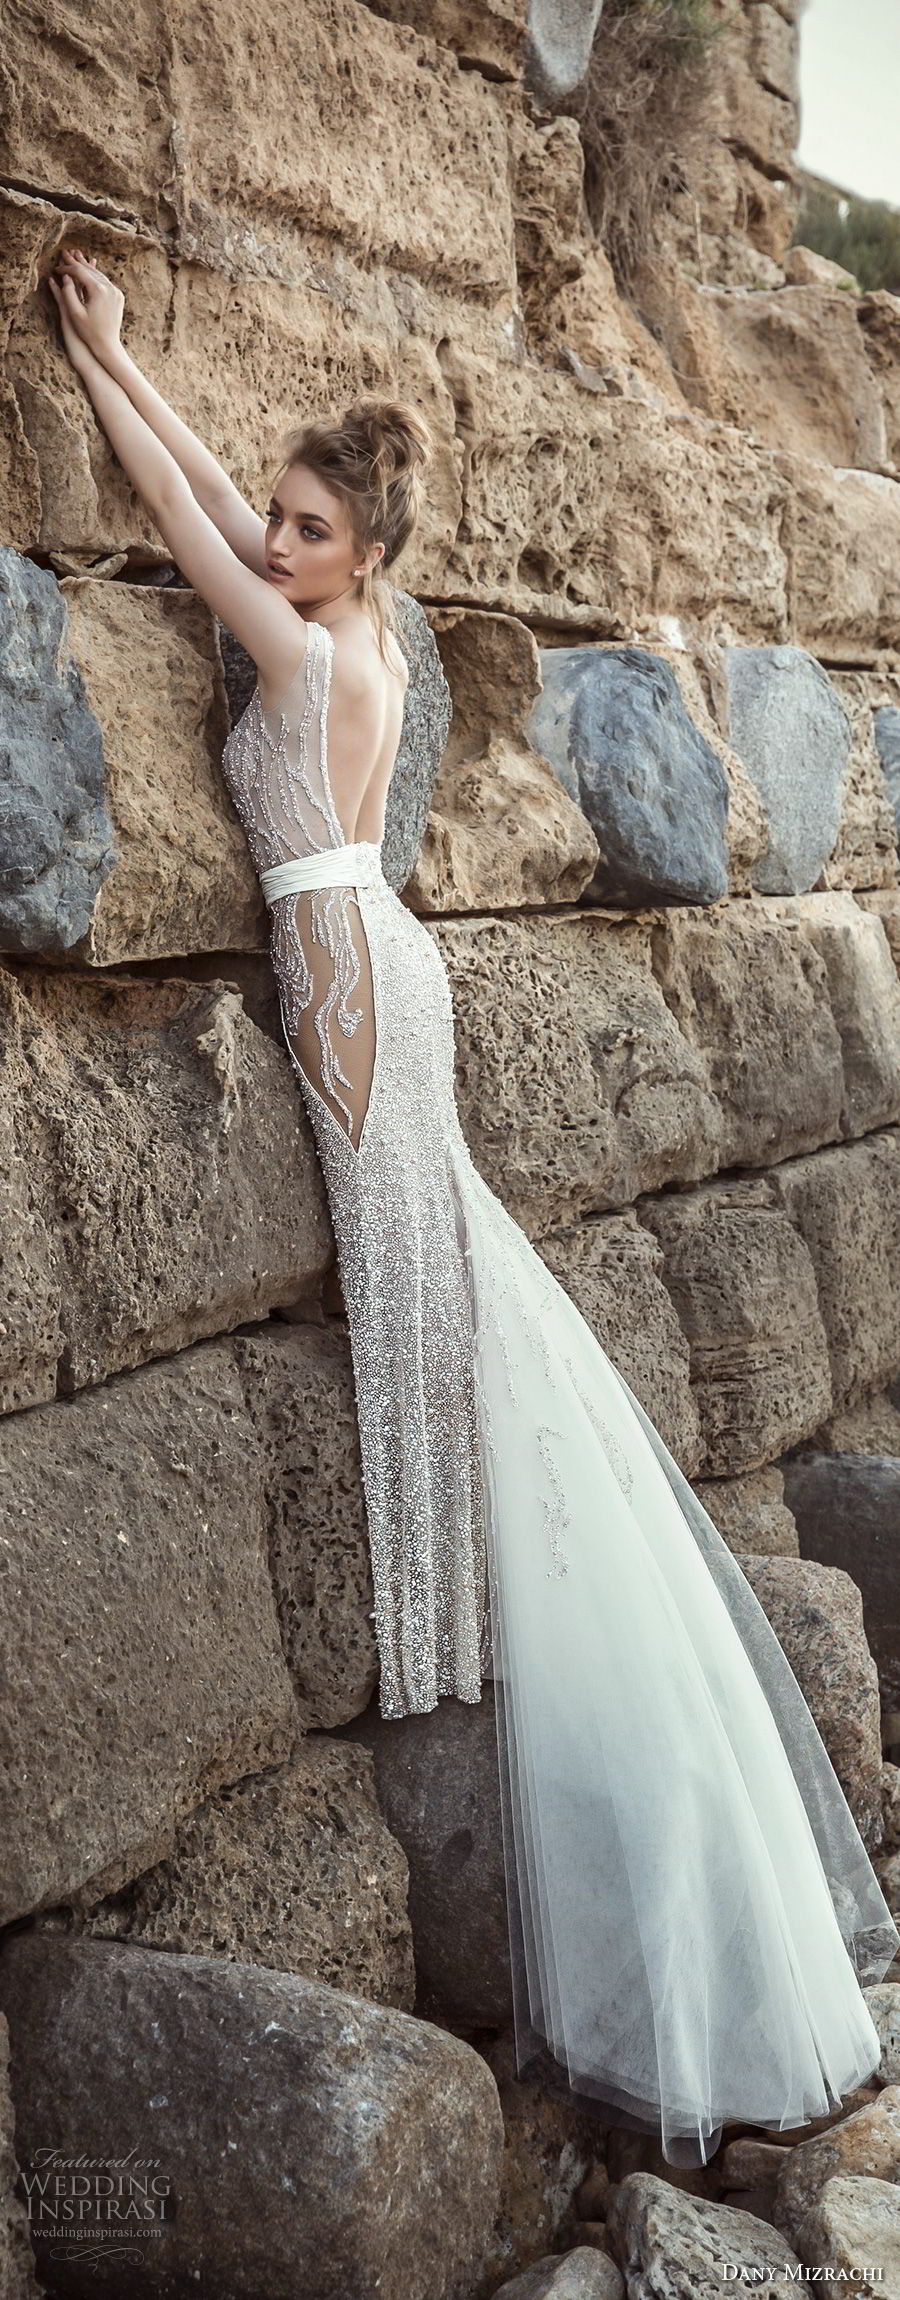 dany mizrachi 2018 bridal sleeveless deep plunging v neck full embellishment glamorous sexy sheath wedding dress open back chapel train (16) sdv